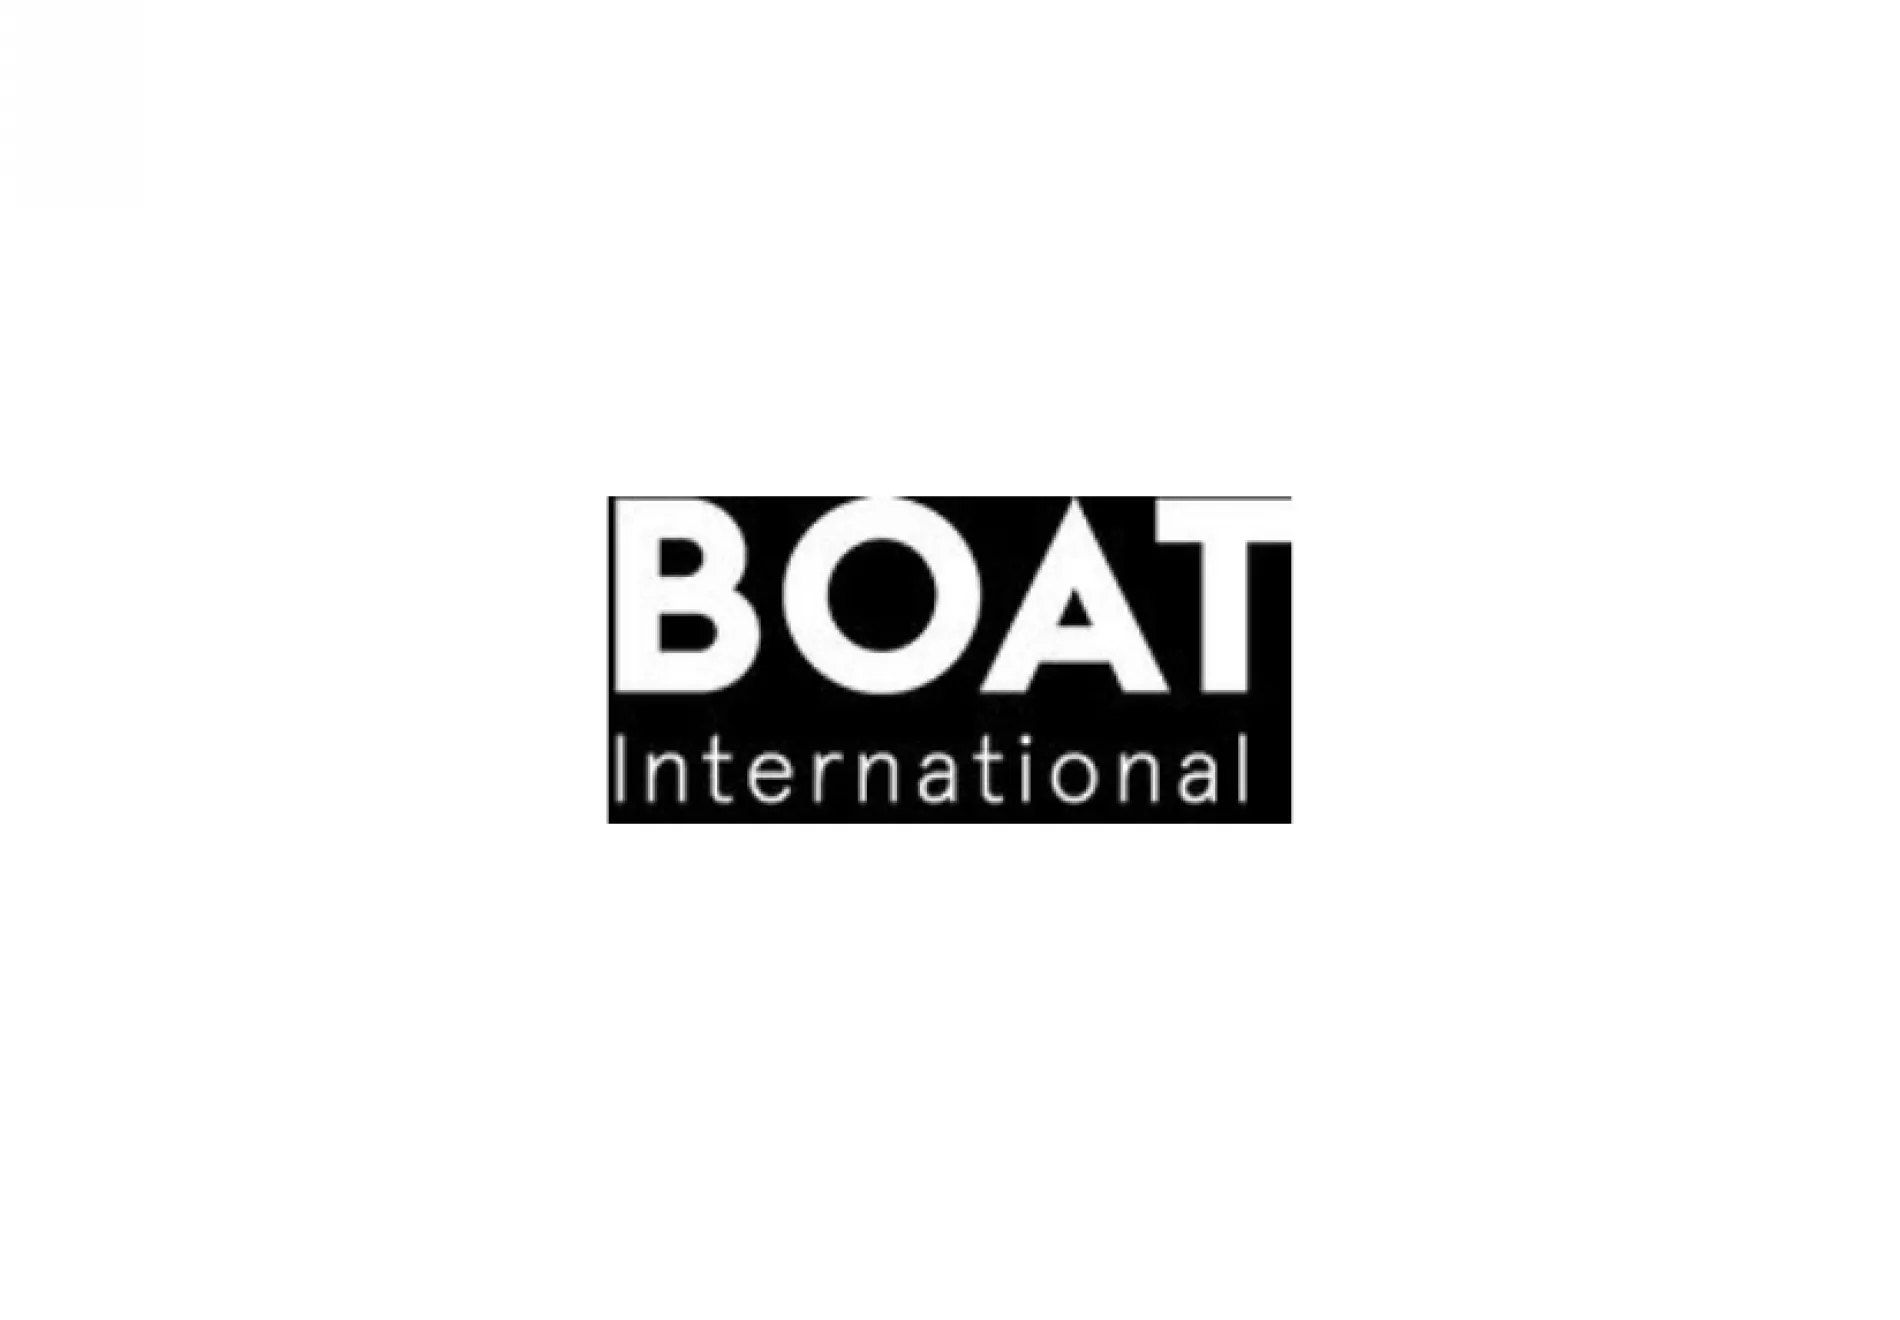 Boat international